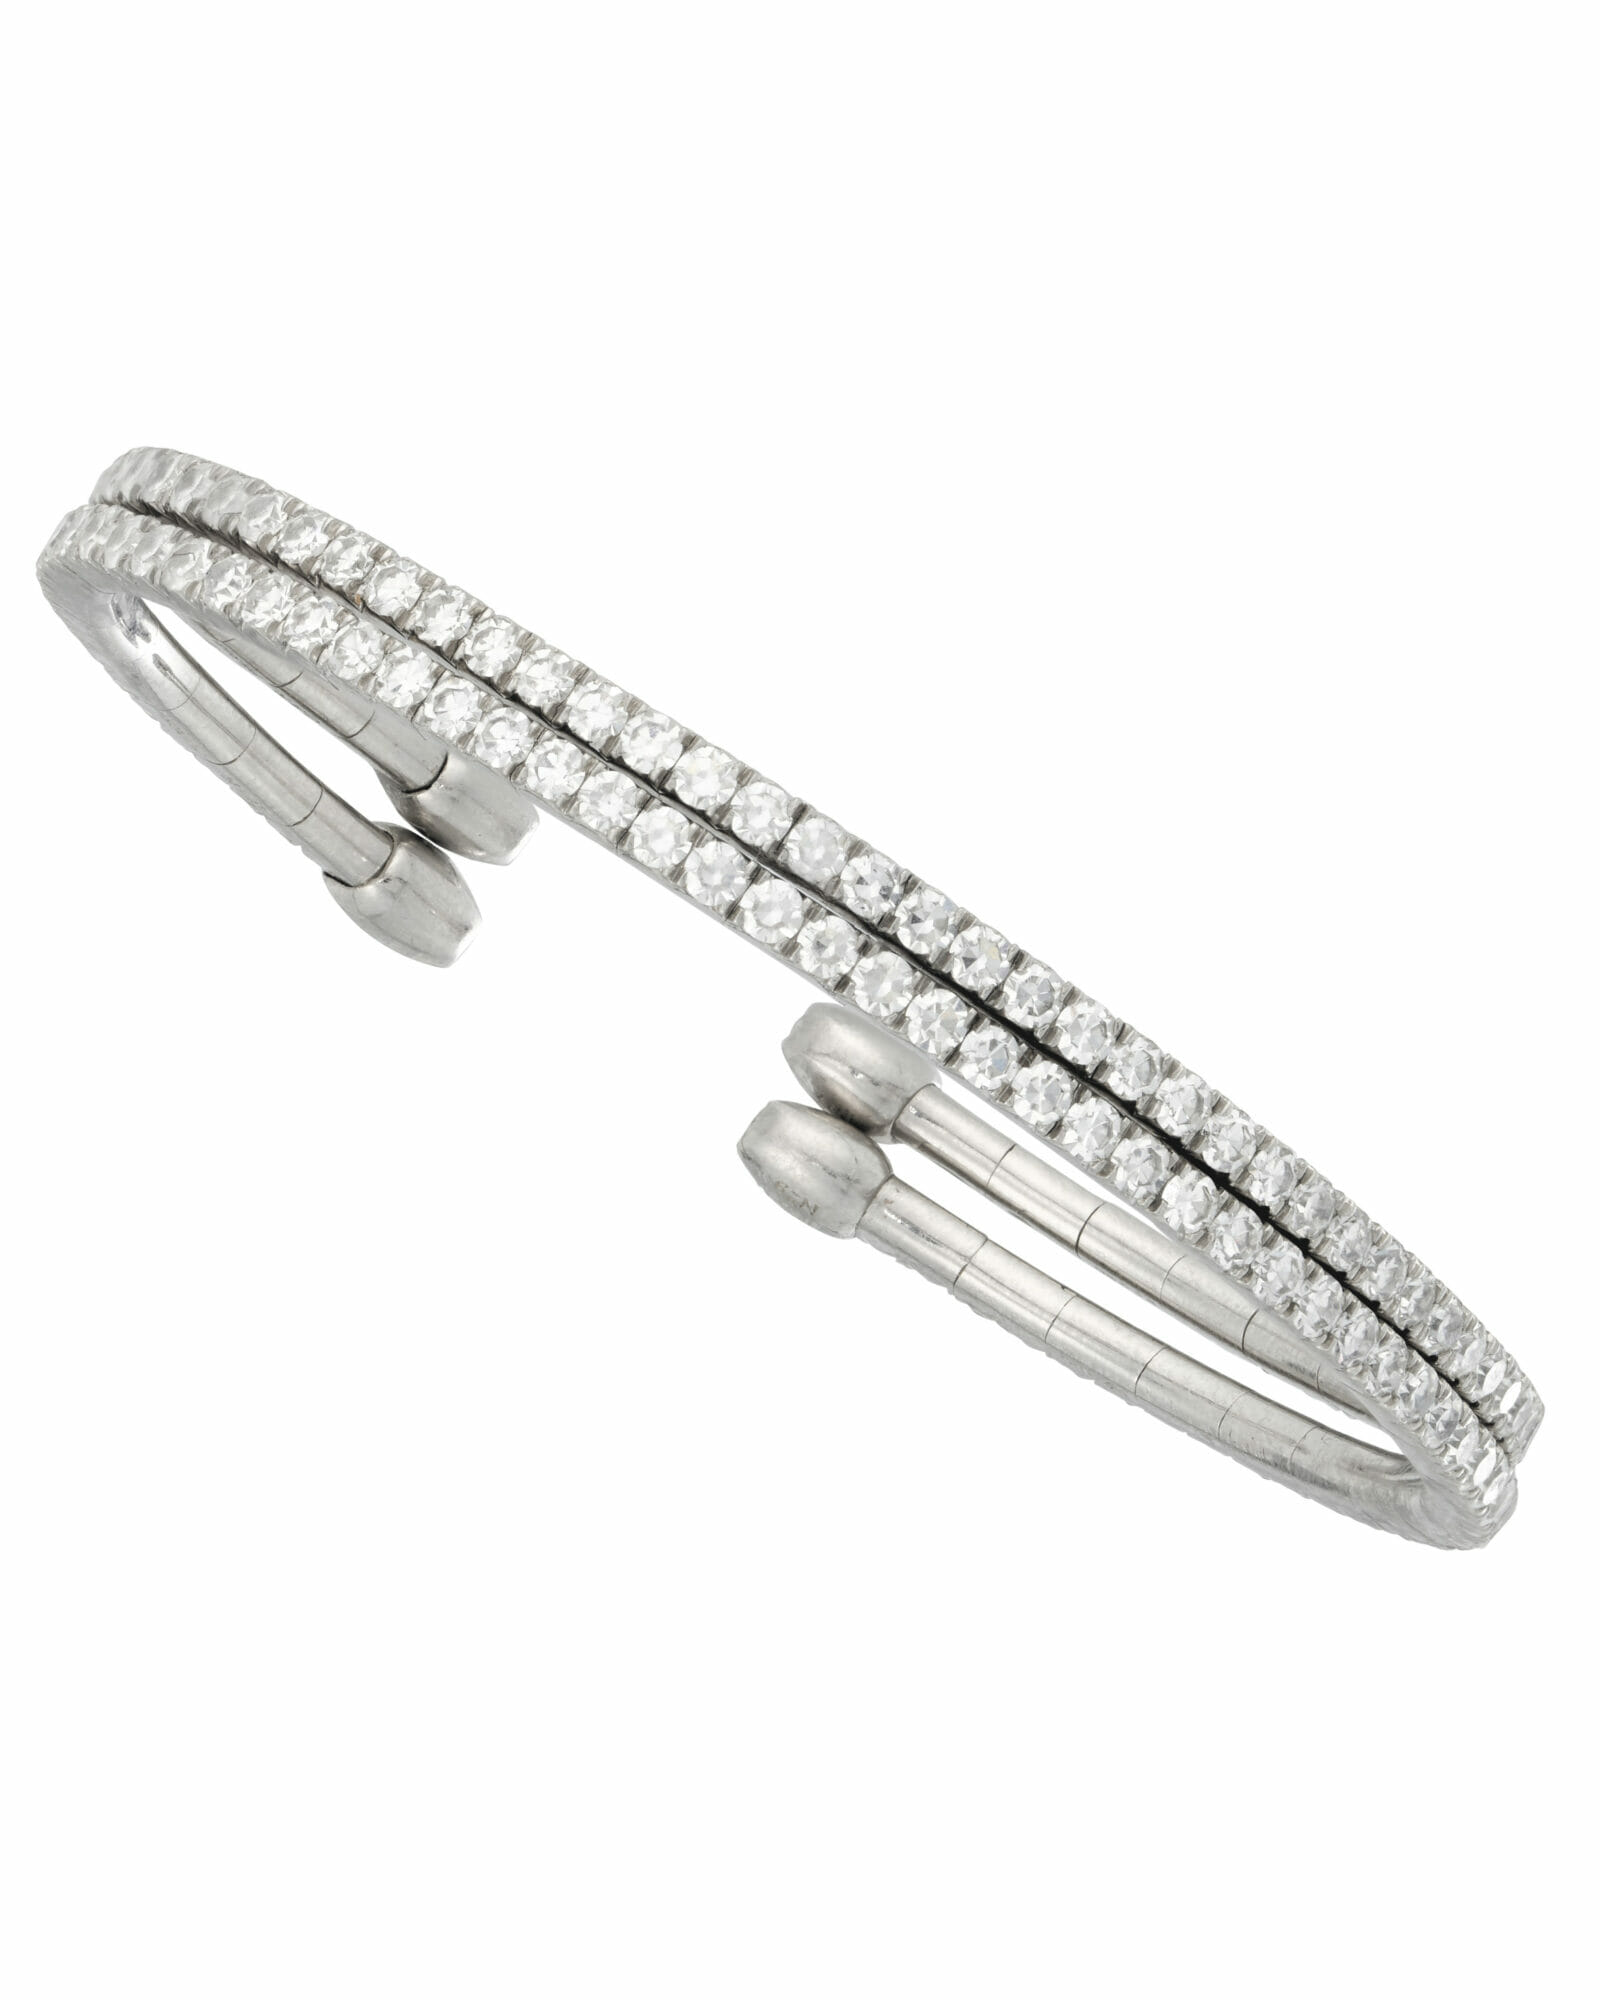 JAR Pair of Diamond Cuff Bracelets at Christie’s Magnificent Jewels  auction